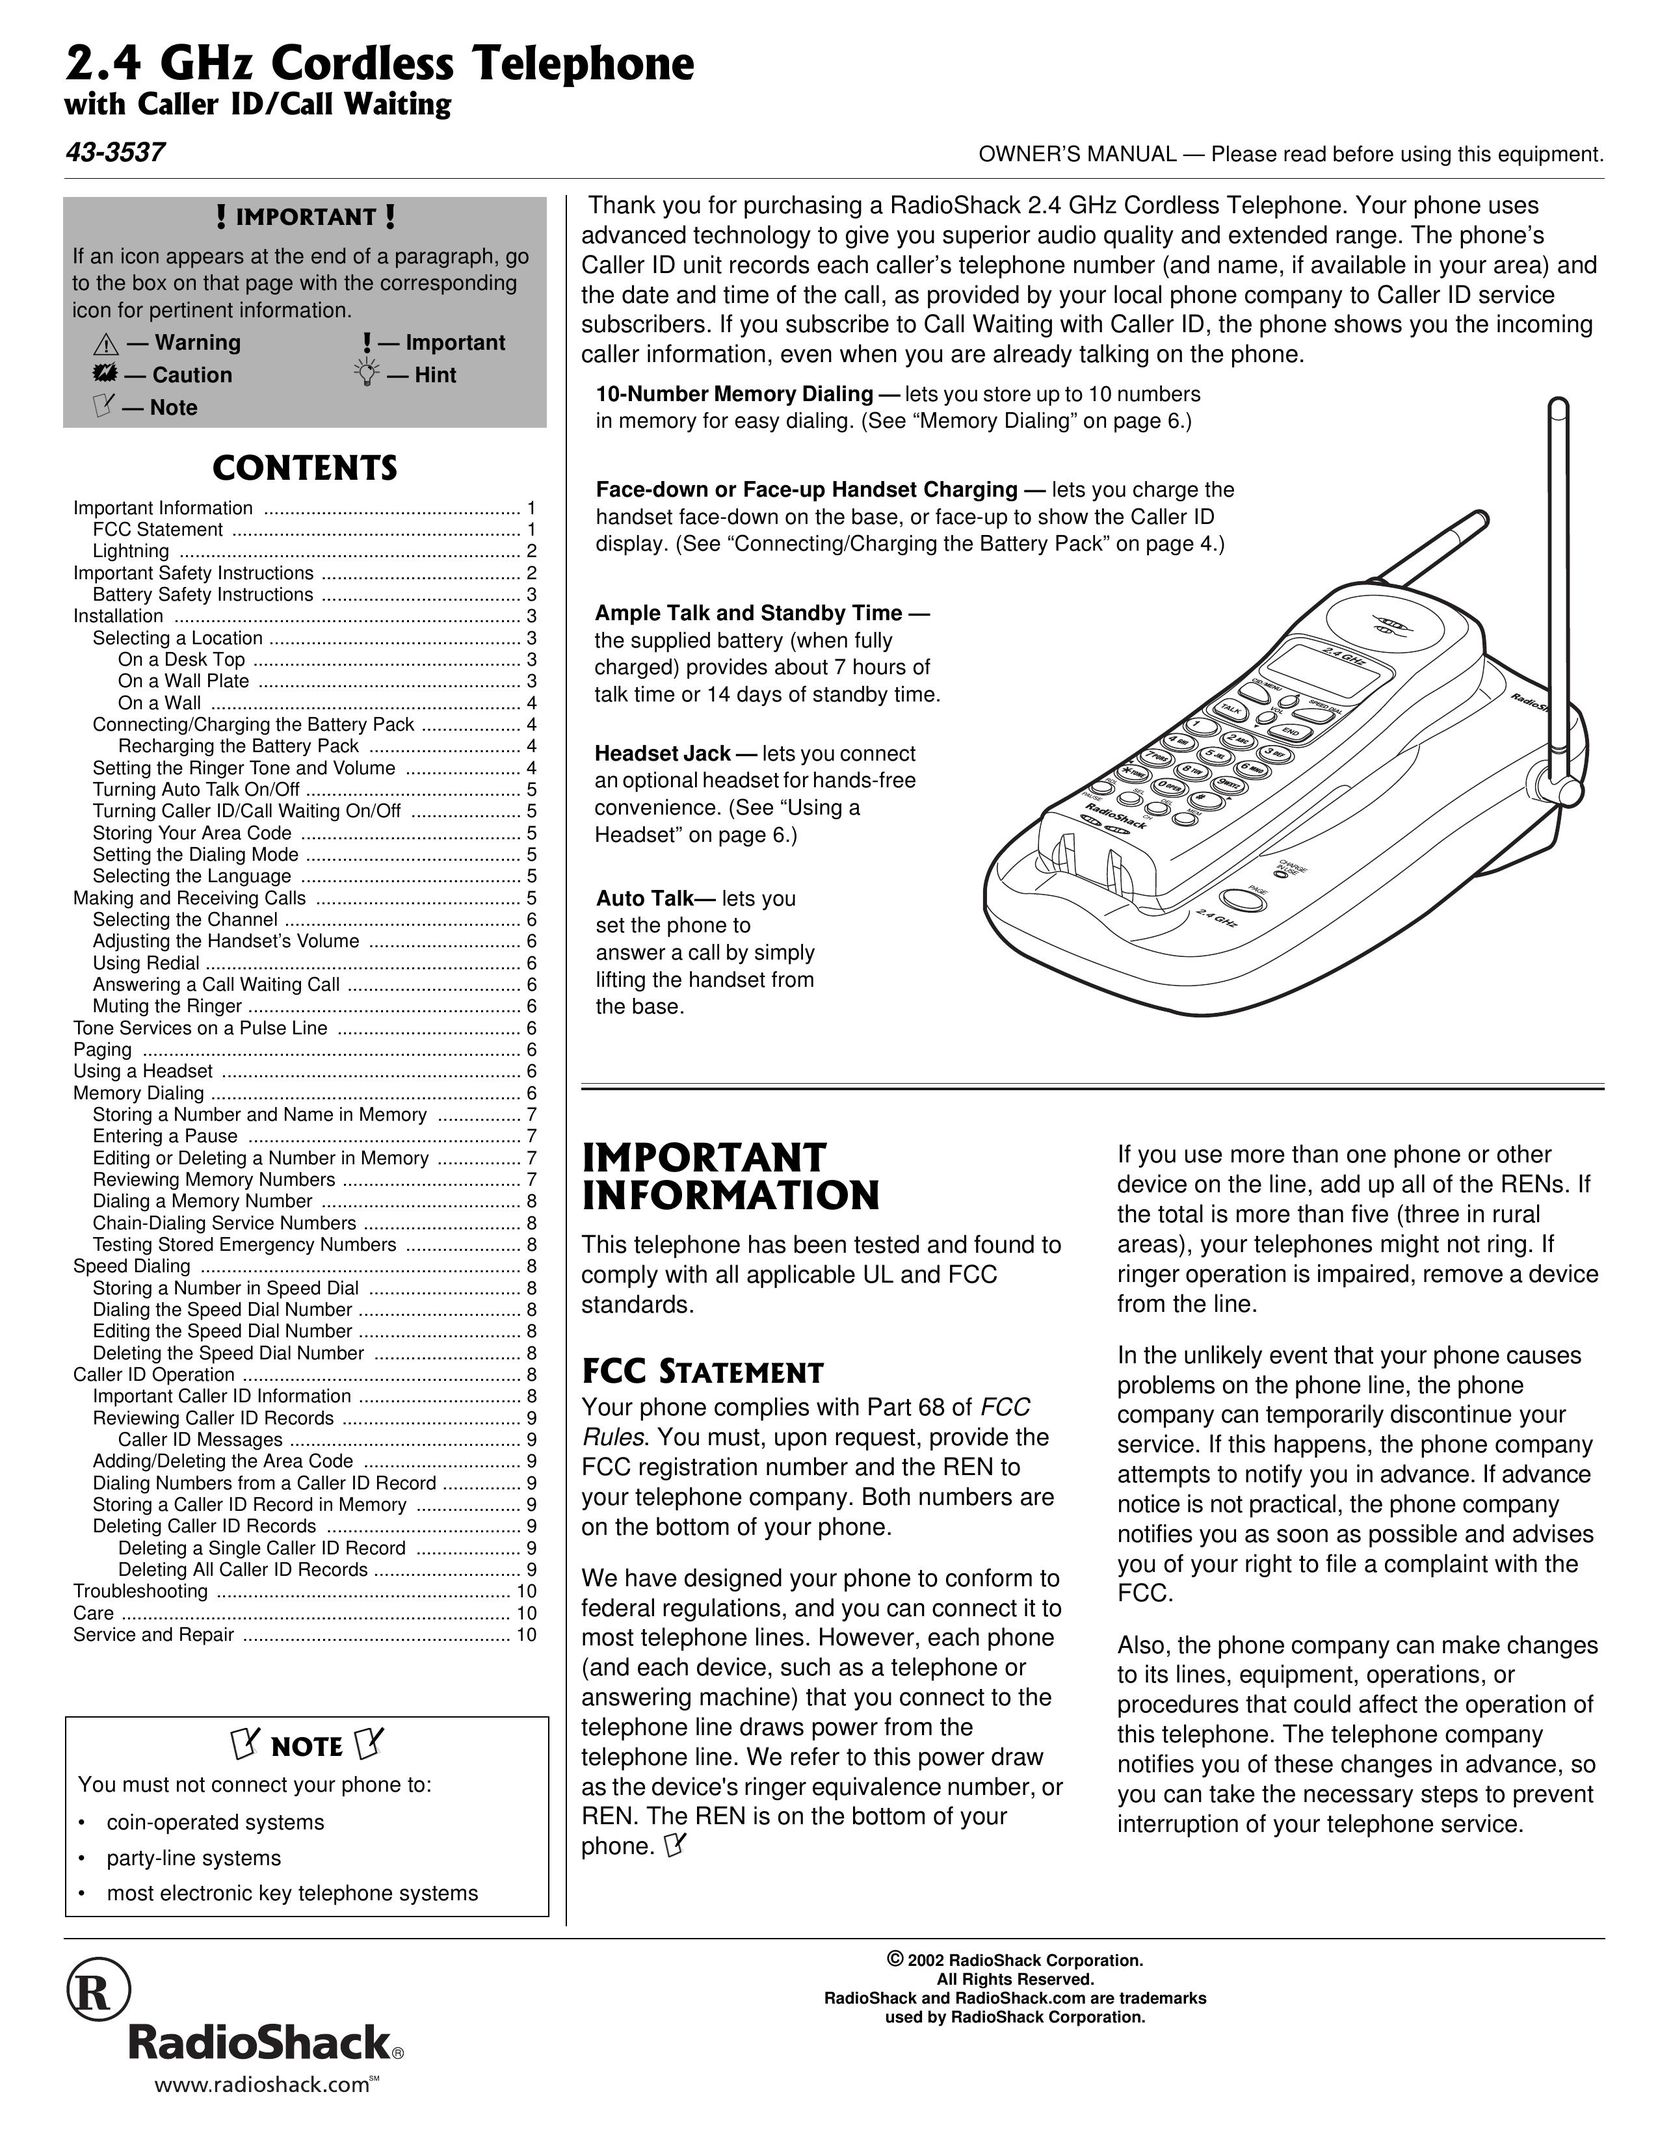 Radio Shack 43-3537 Cordless Telephone User Manual